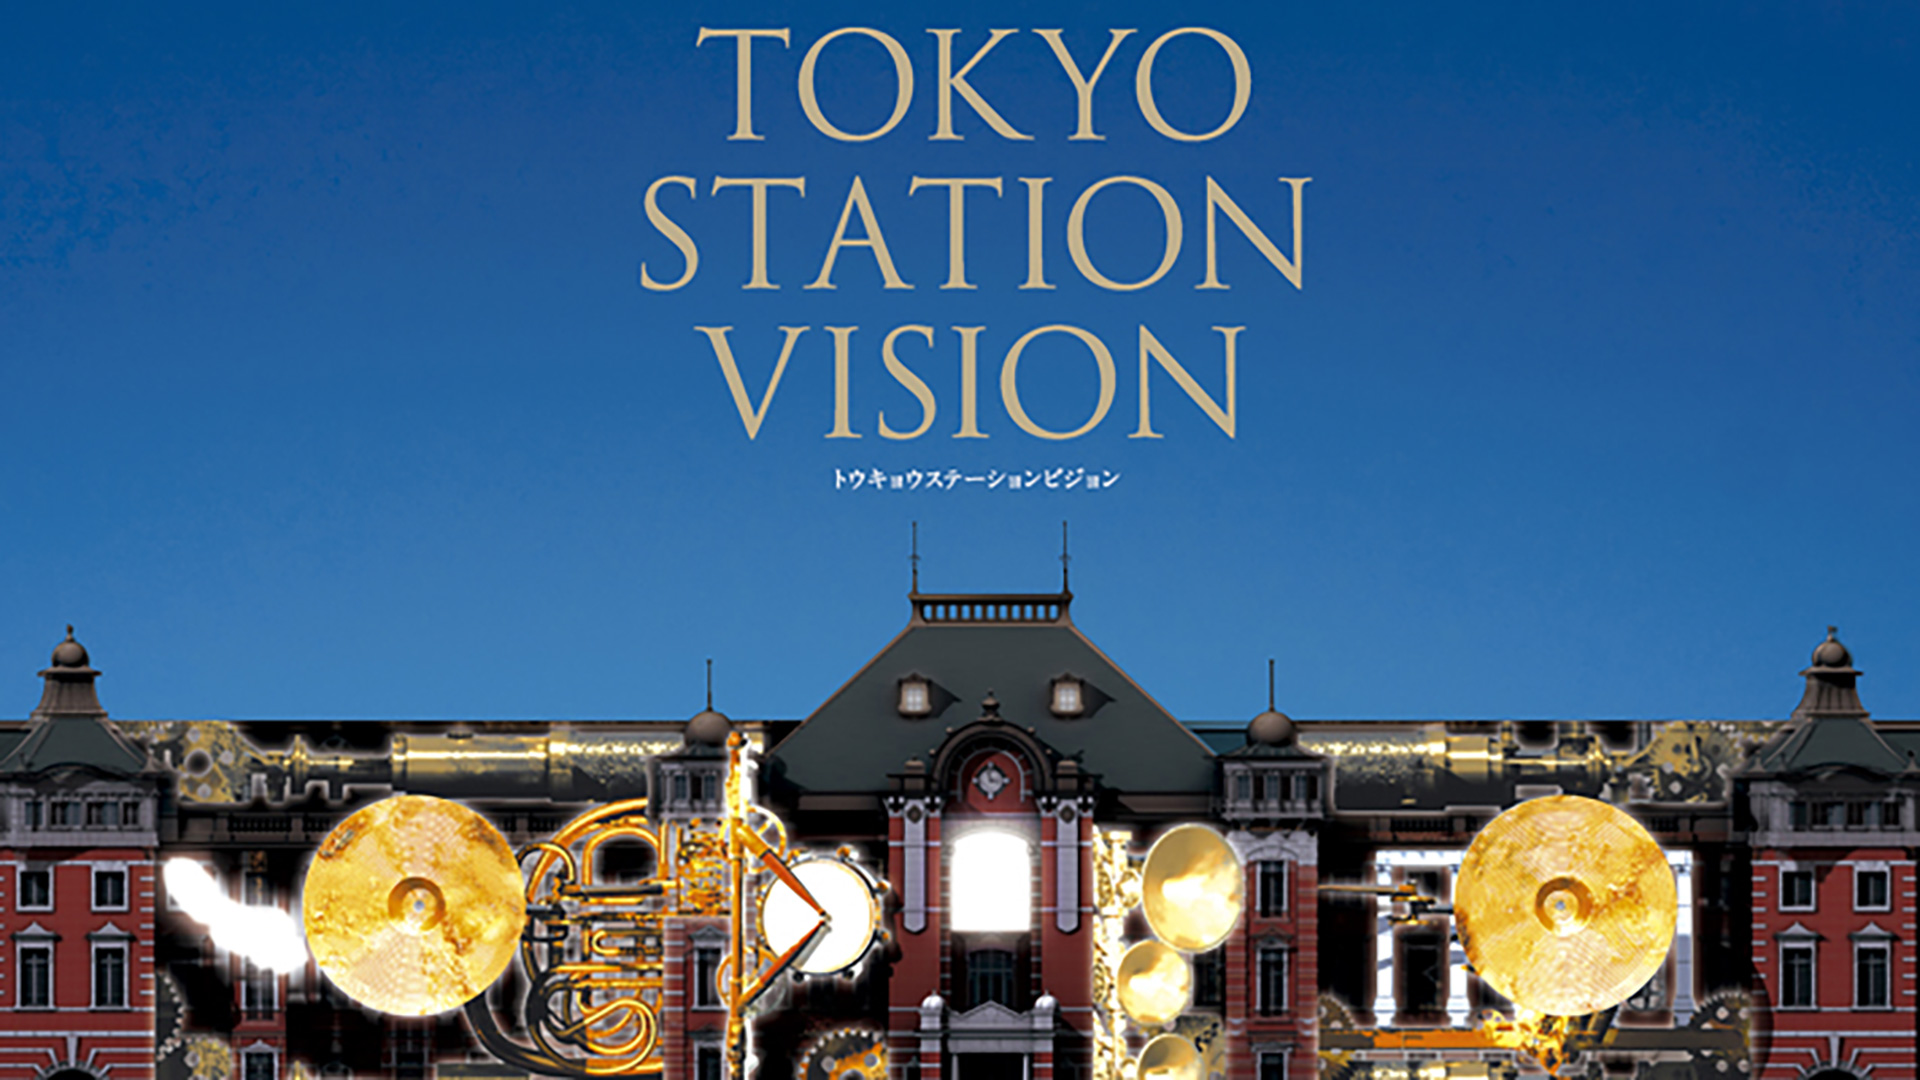 TOKYO STATION VISION